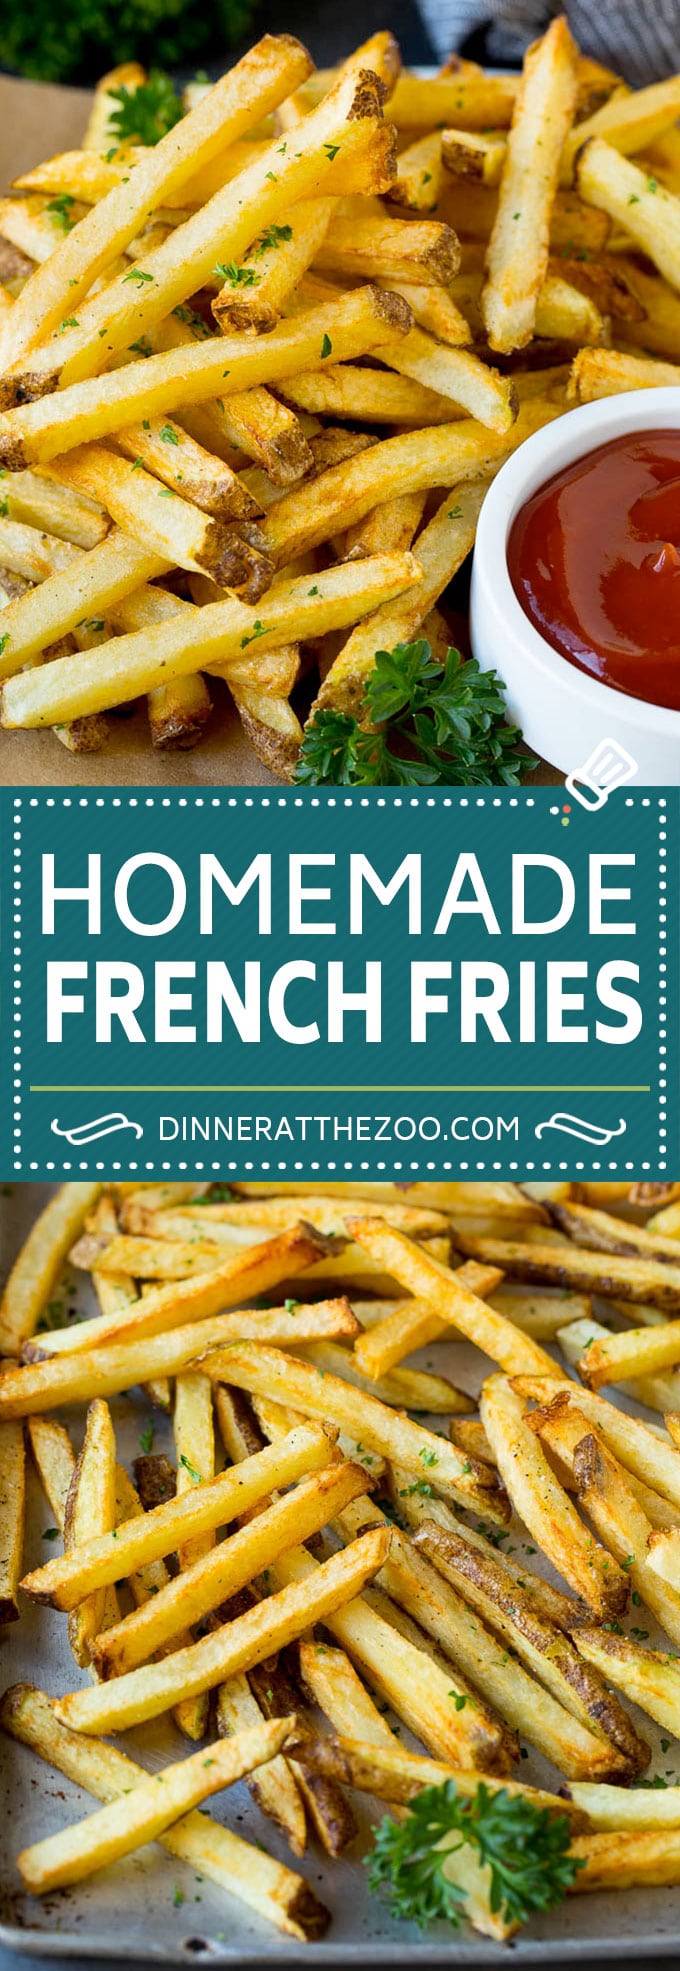 Homemade French Fries Recipe #potatoes #fries #dinner #dinneratthezoo